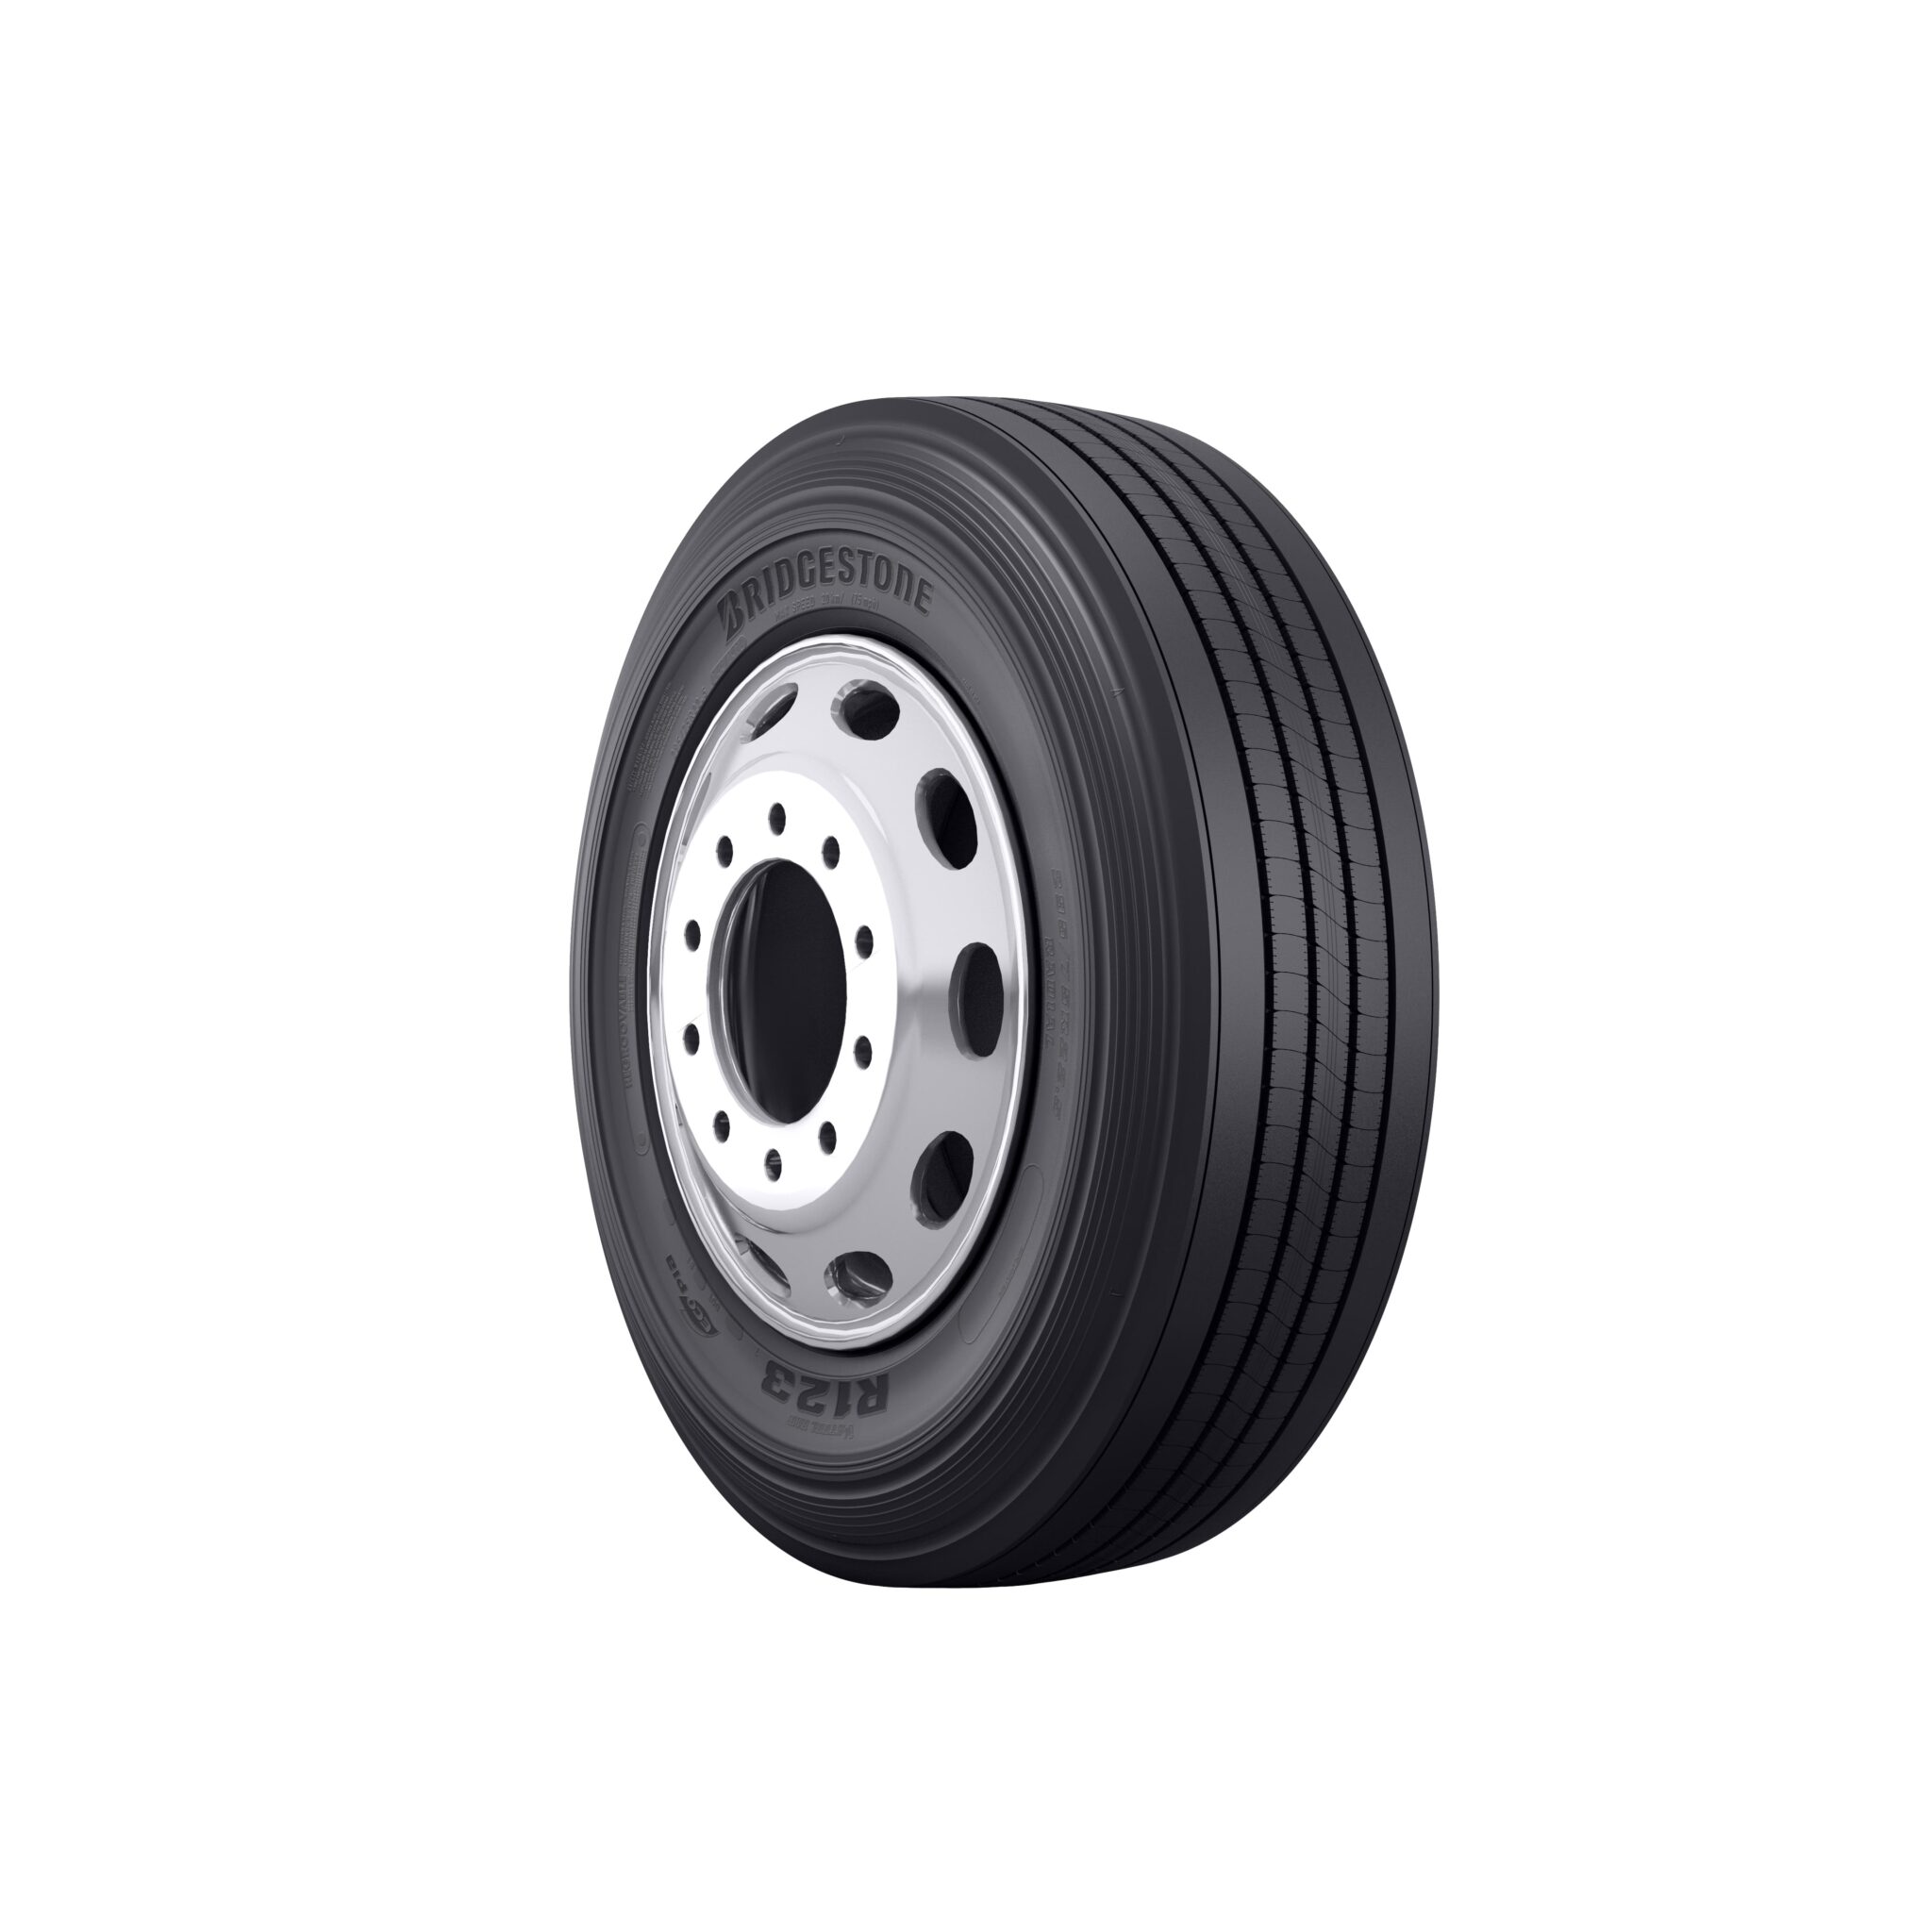 Bridgestone adds to Ecopia commercial truck tire portfolio